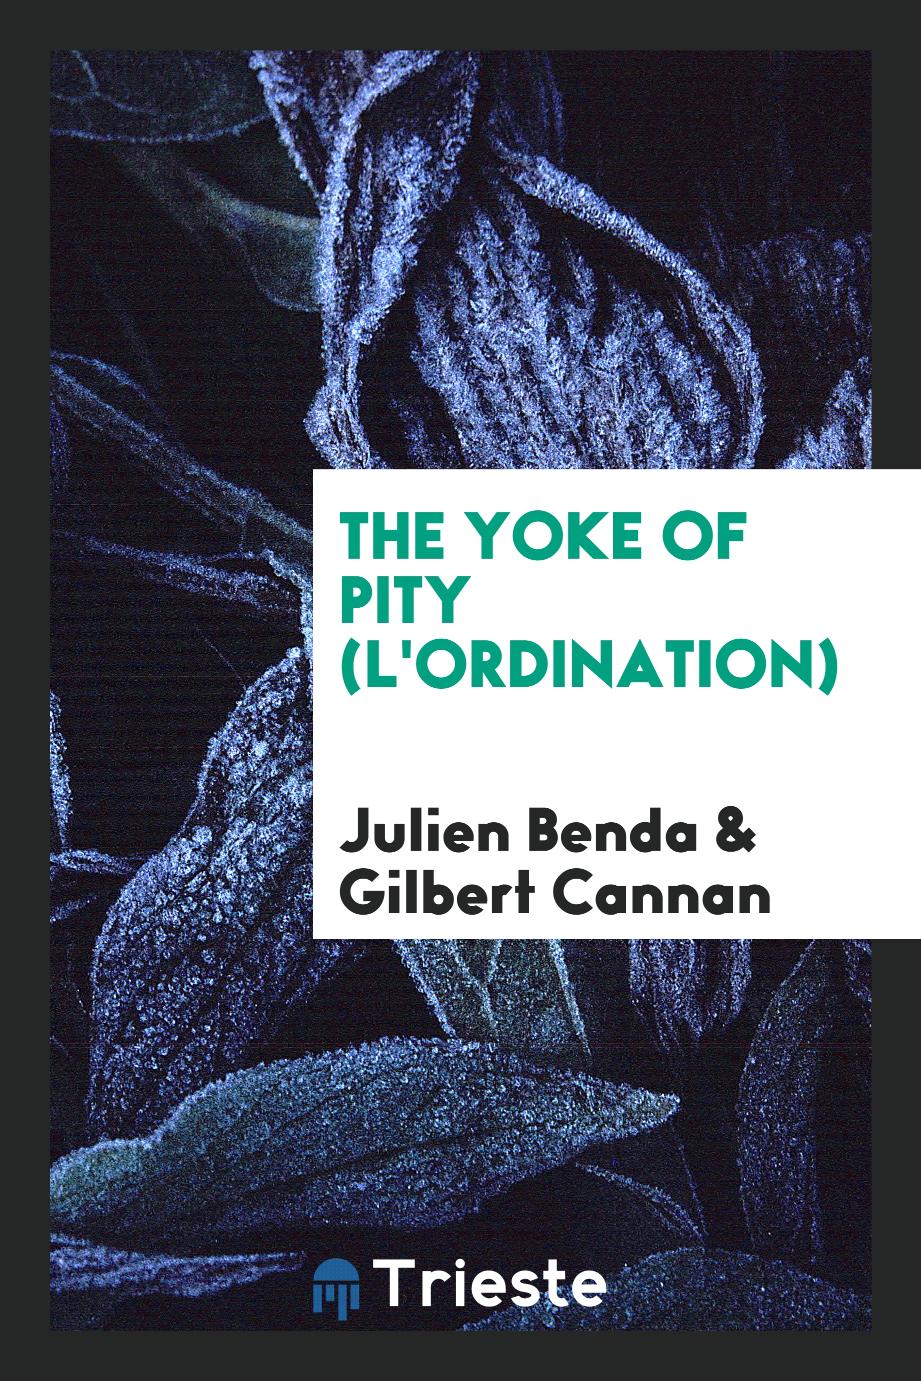 The yoke of pity (L'ordination)